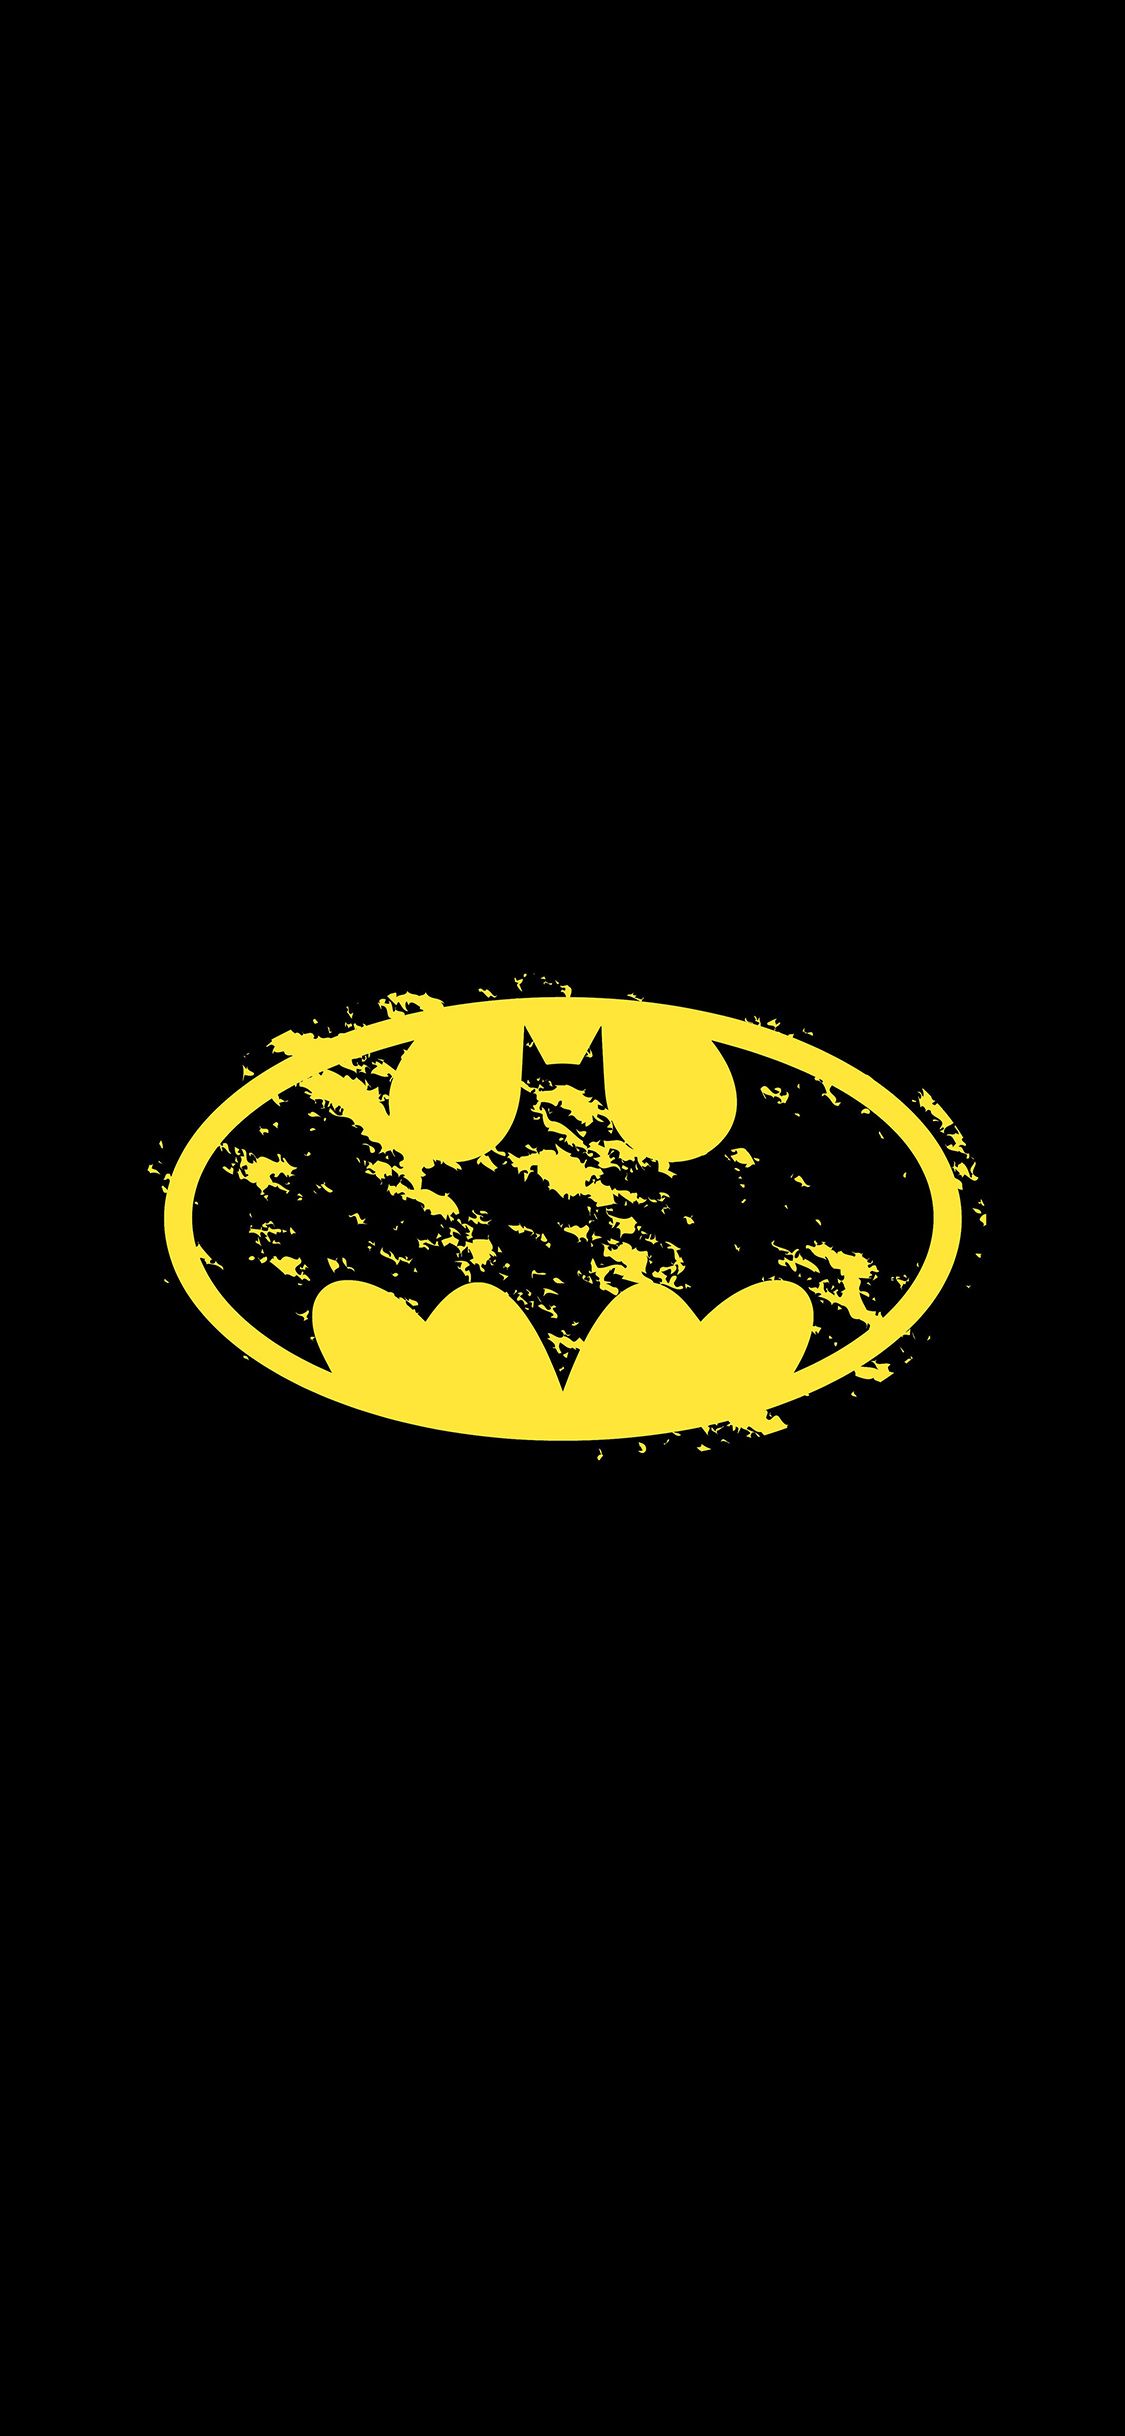 iPhone X wallpaper. batman dark art logo